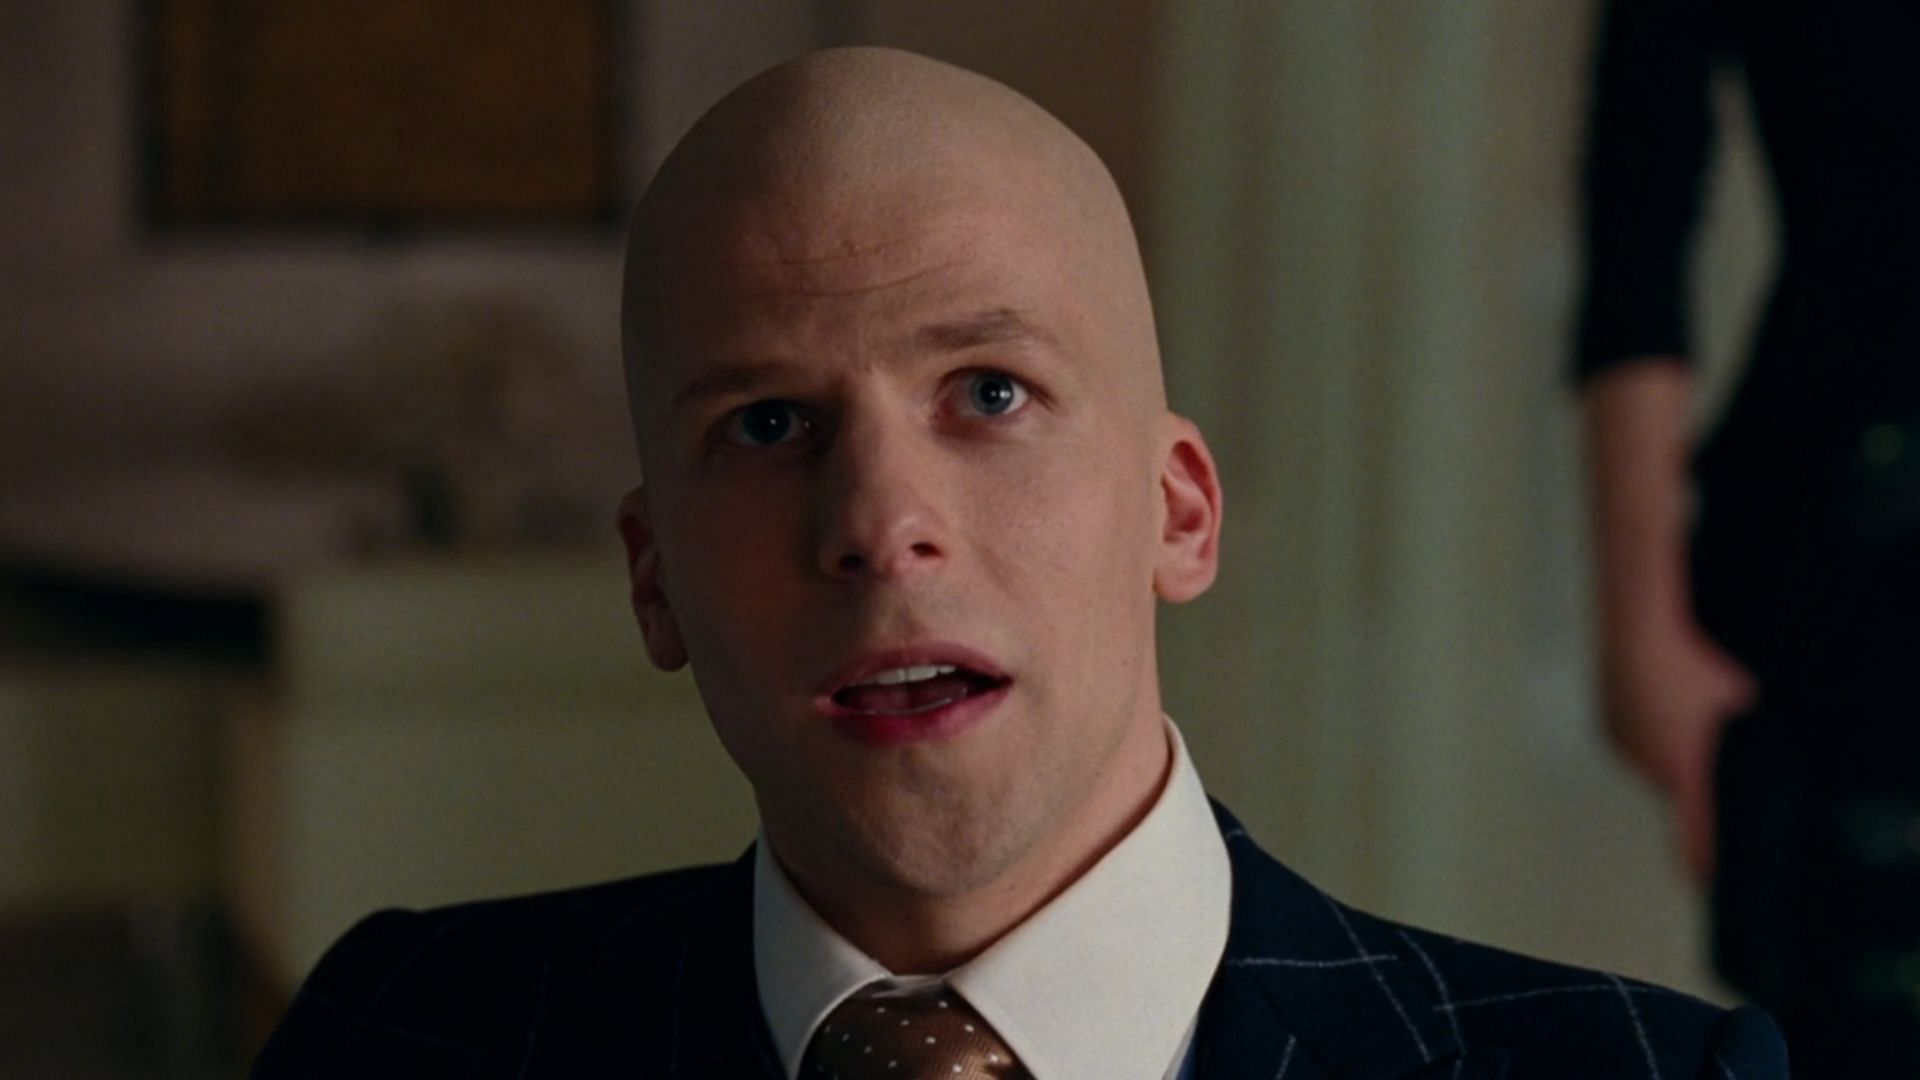 Jesse Eisenberg as seen in Justice League (Image via Warner Bros. Pictures)